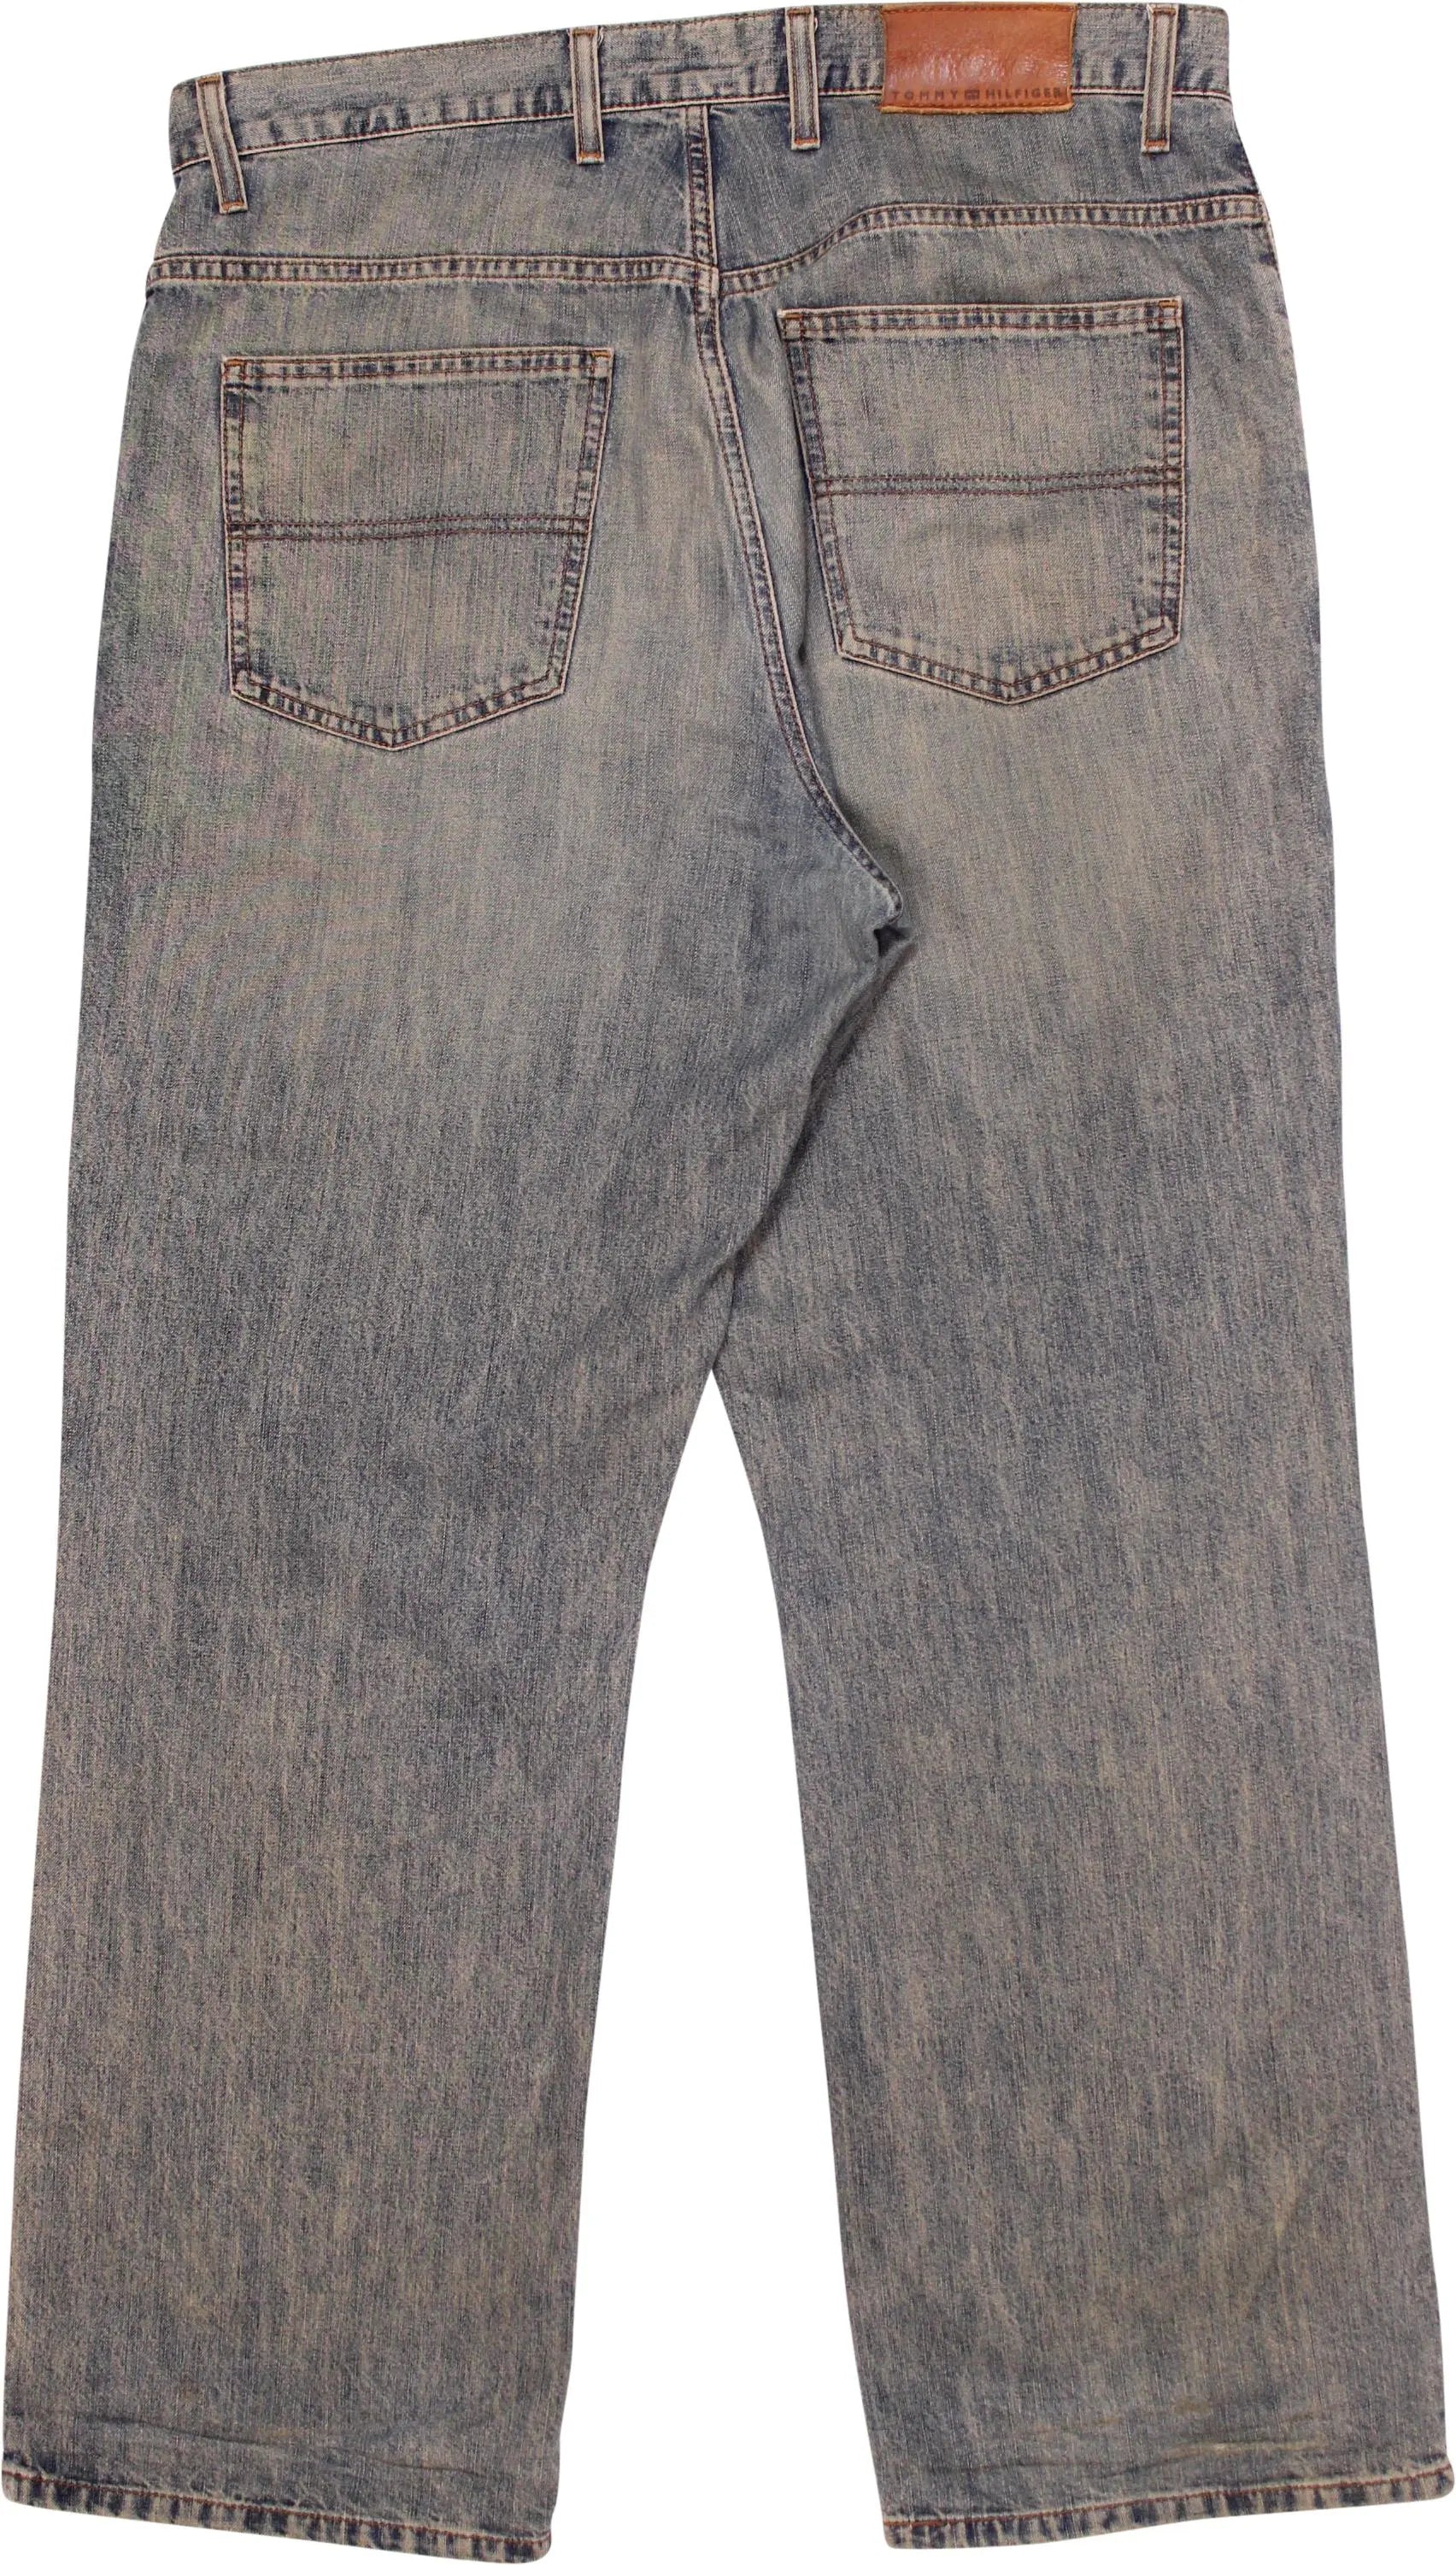 Tommy Hilfiger - Tommy Hilfiger Loose Fit Jeans- ThriftTale.com - Vintage and second handclothing